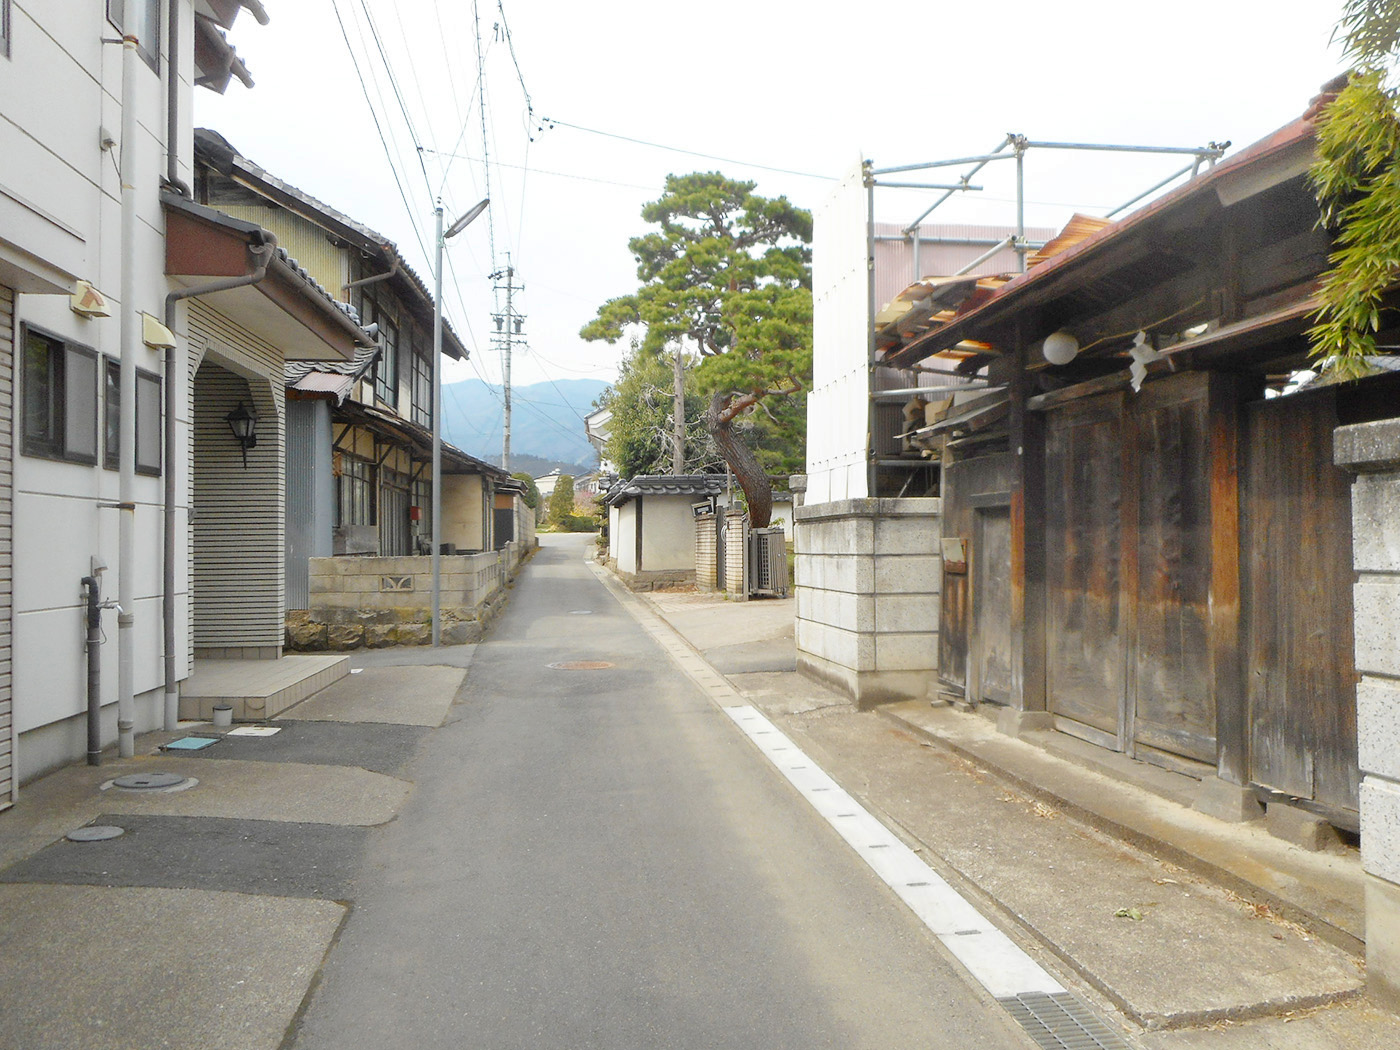 Takemizuwake Shrine Jinguji Temple Remains